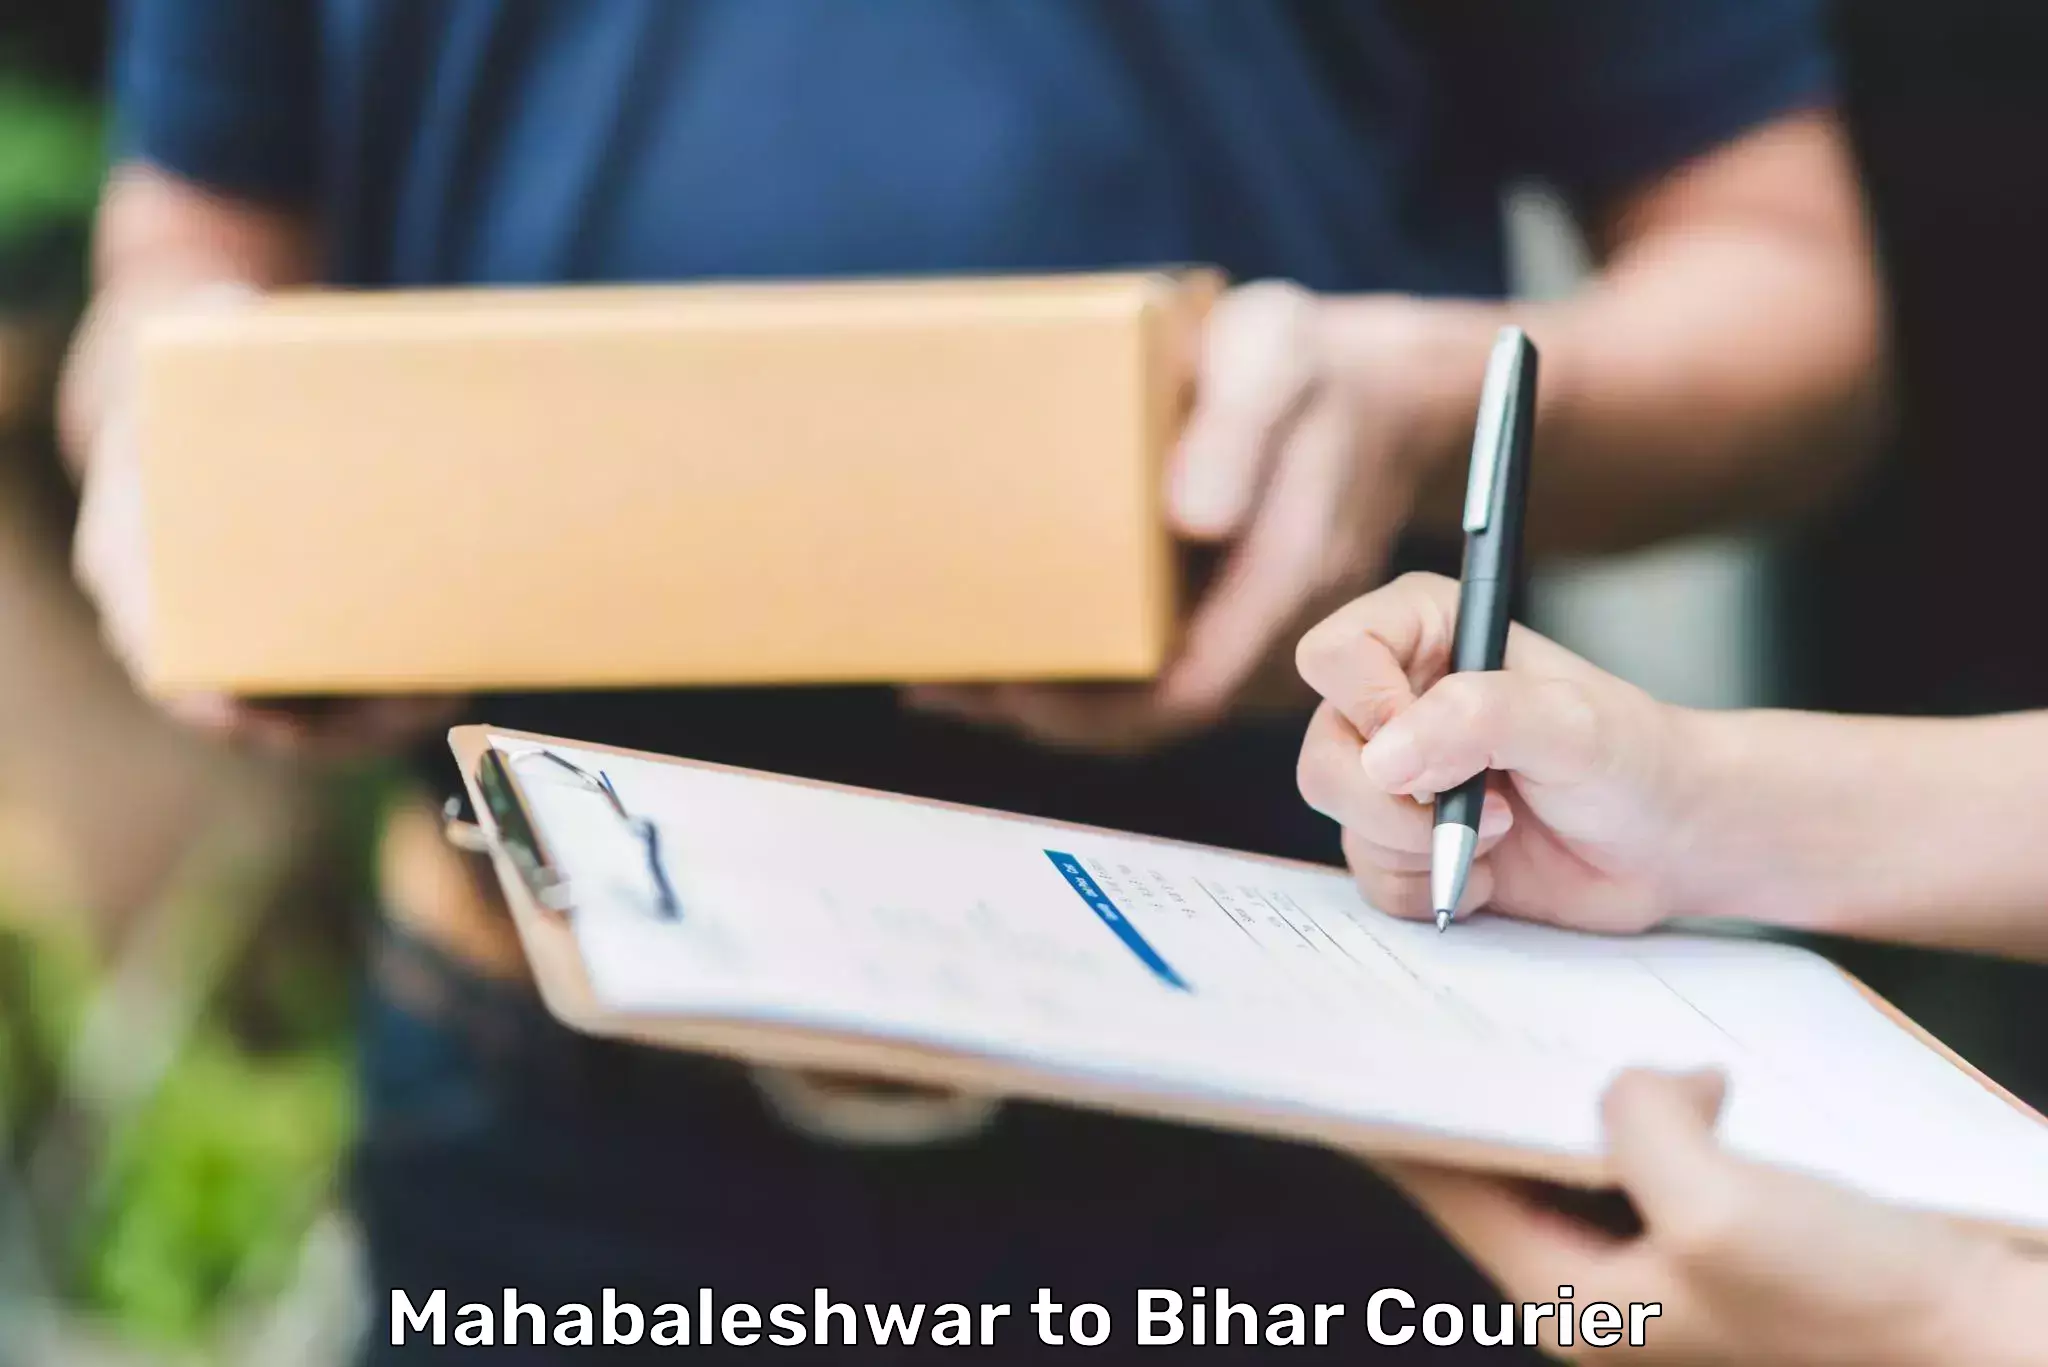 Smart shipping technology Mahabaleshwar to Mahnar Bazar